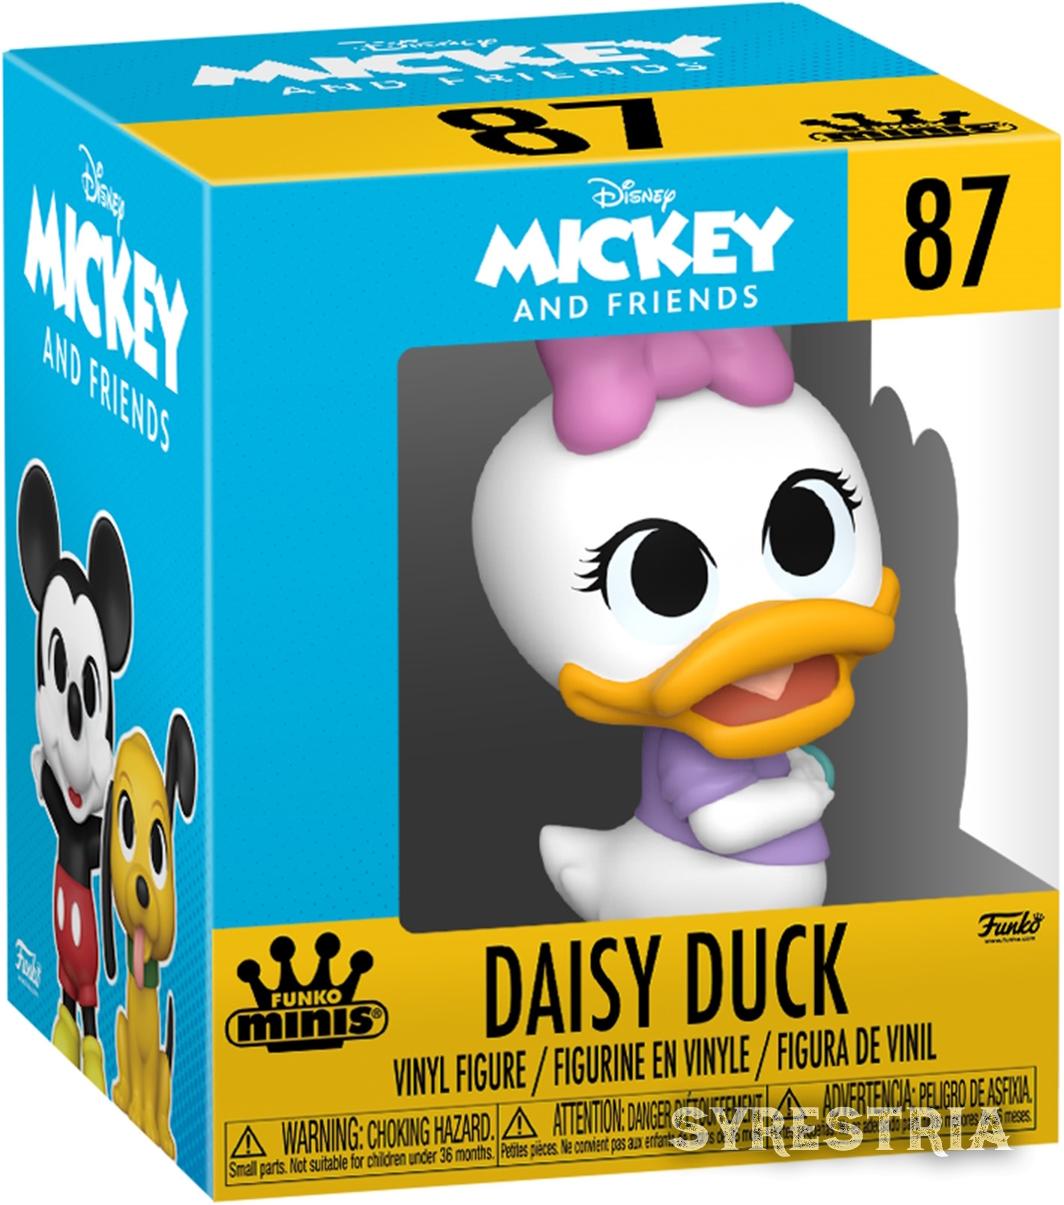 Disney Mickey and Frinds - Daisy Duck 87 - Funko Minis Vynl Figuren